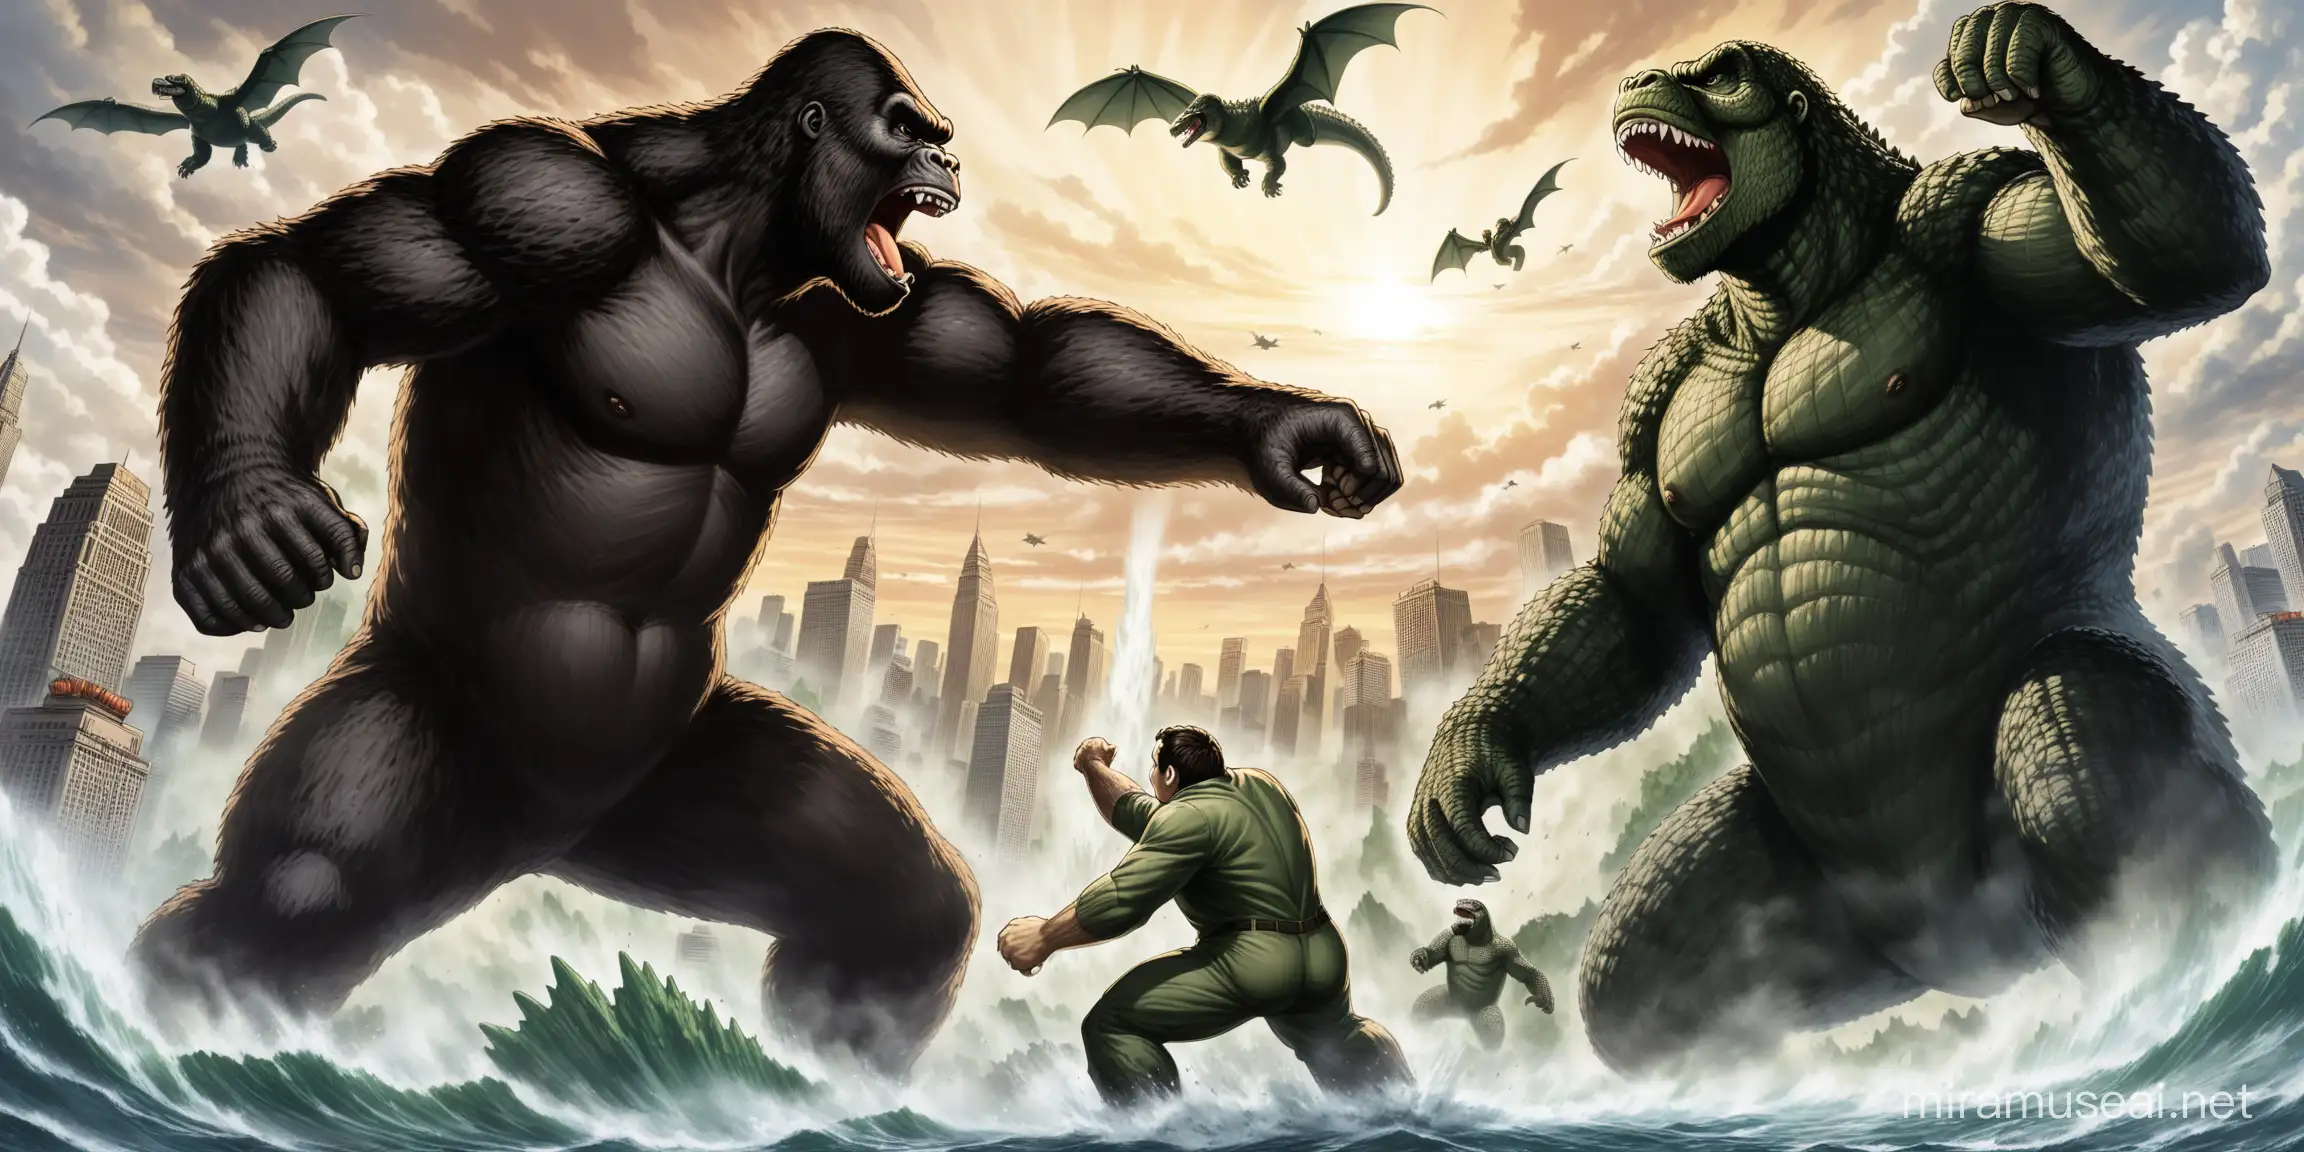 Epic Battle King Kong and Godzilla Unite Against a Common Foe